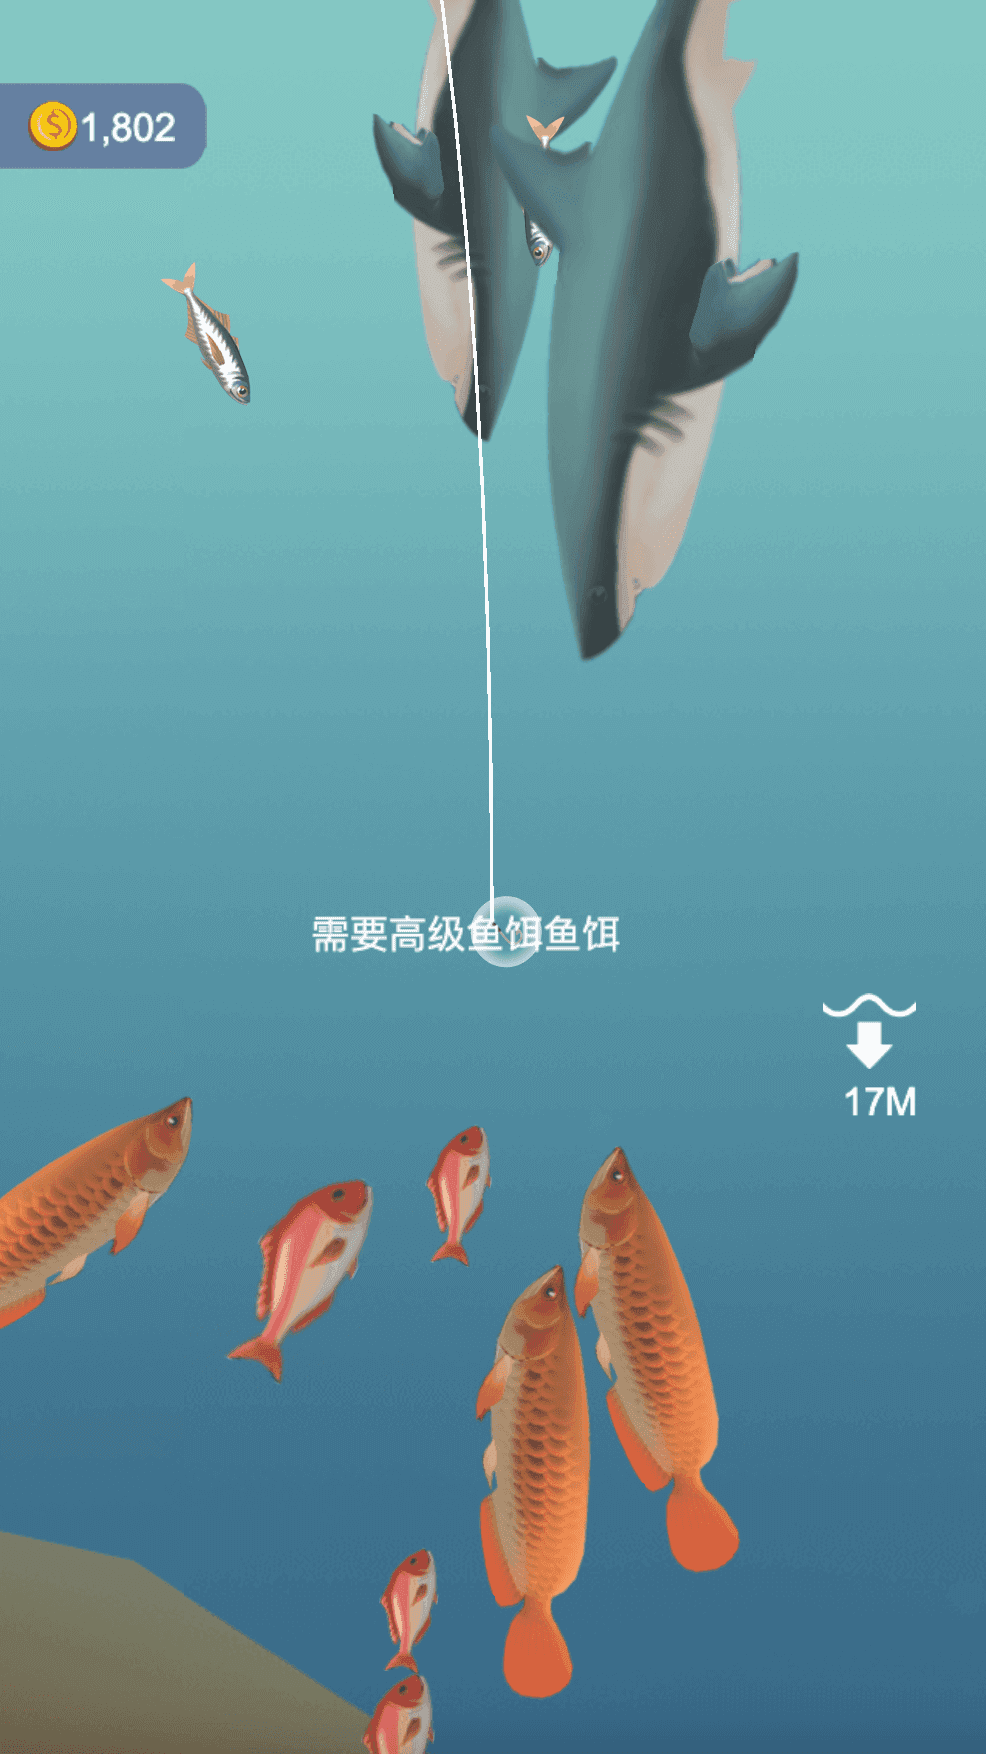 Fishing Simulator android iOS-TapTap